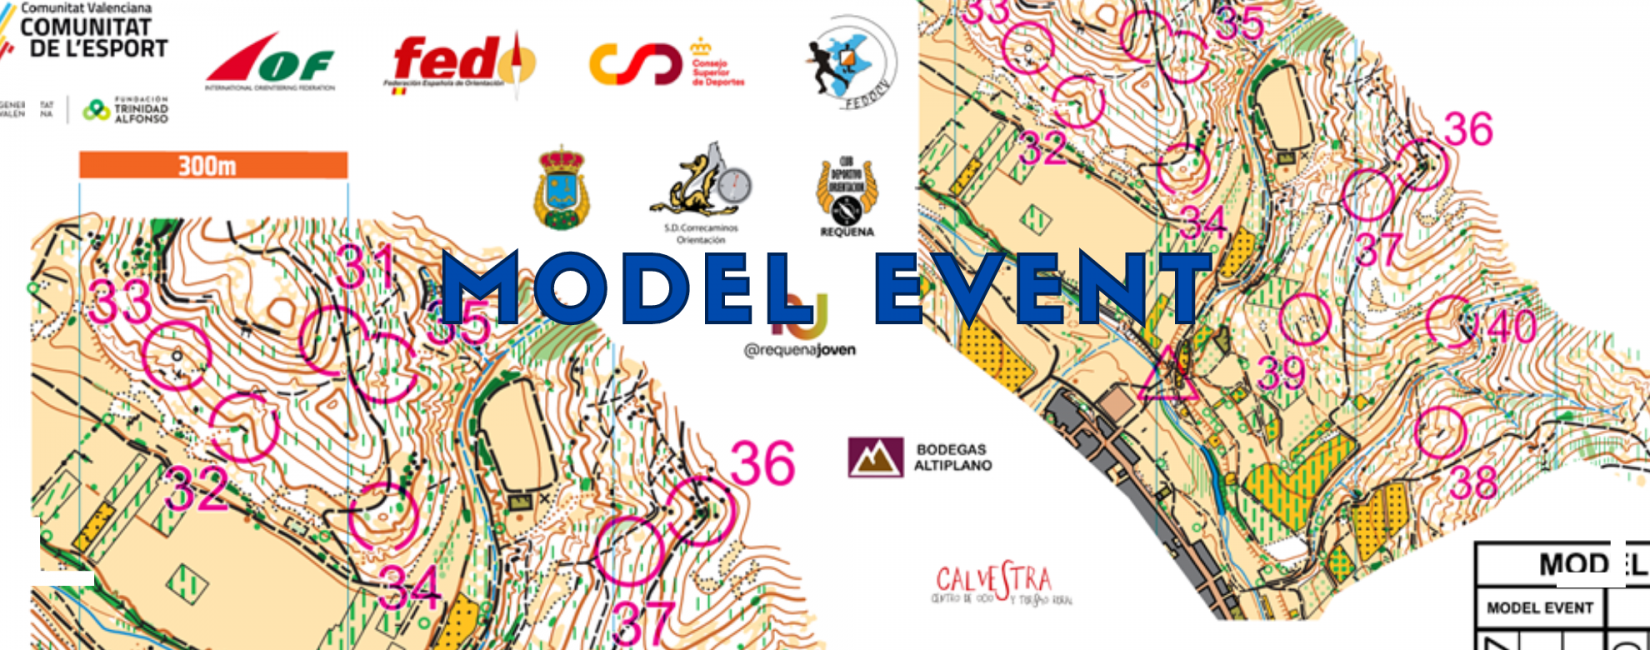 Model event